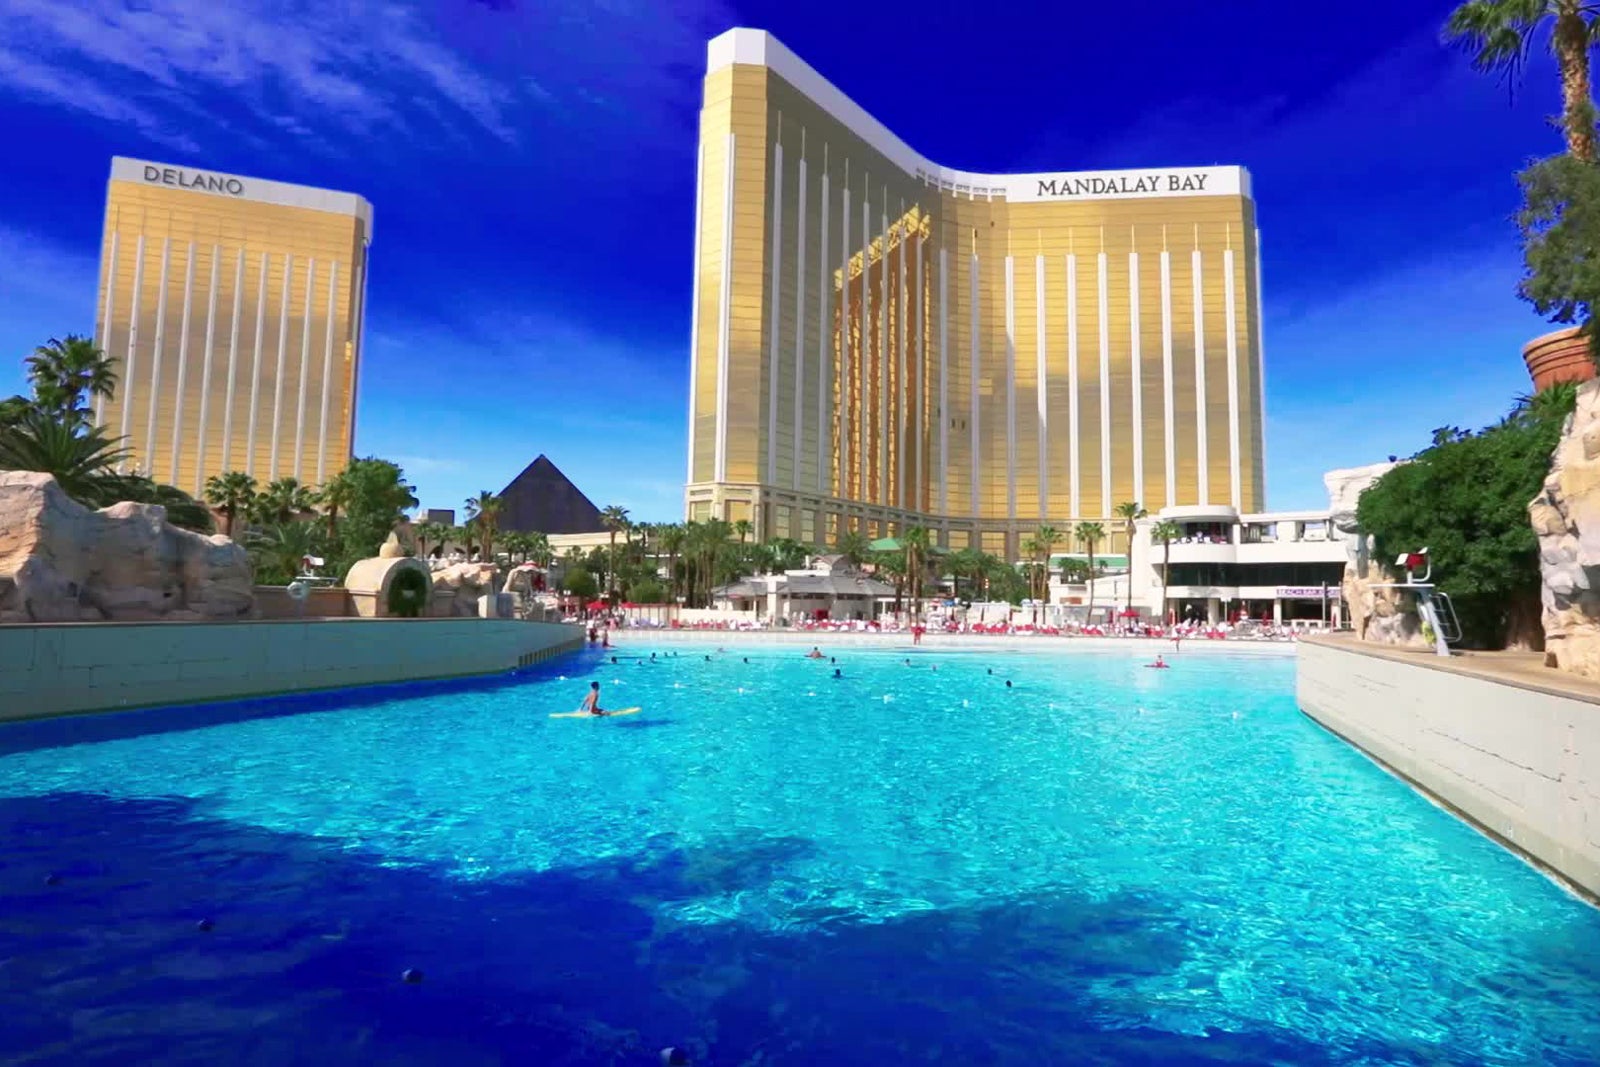 Best Hotels In Las Vegas, Las Vegas Hotels That Offer Value For Money